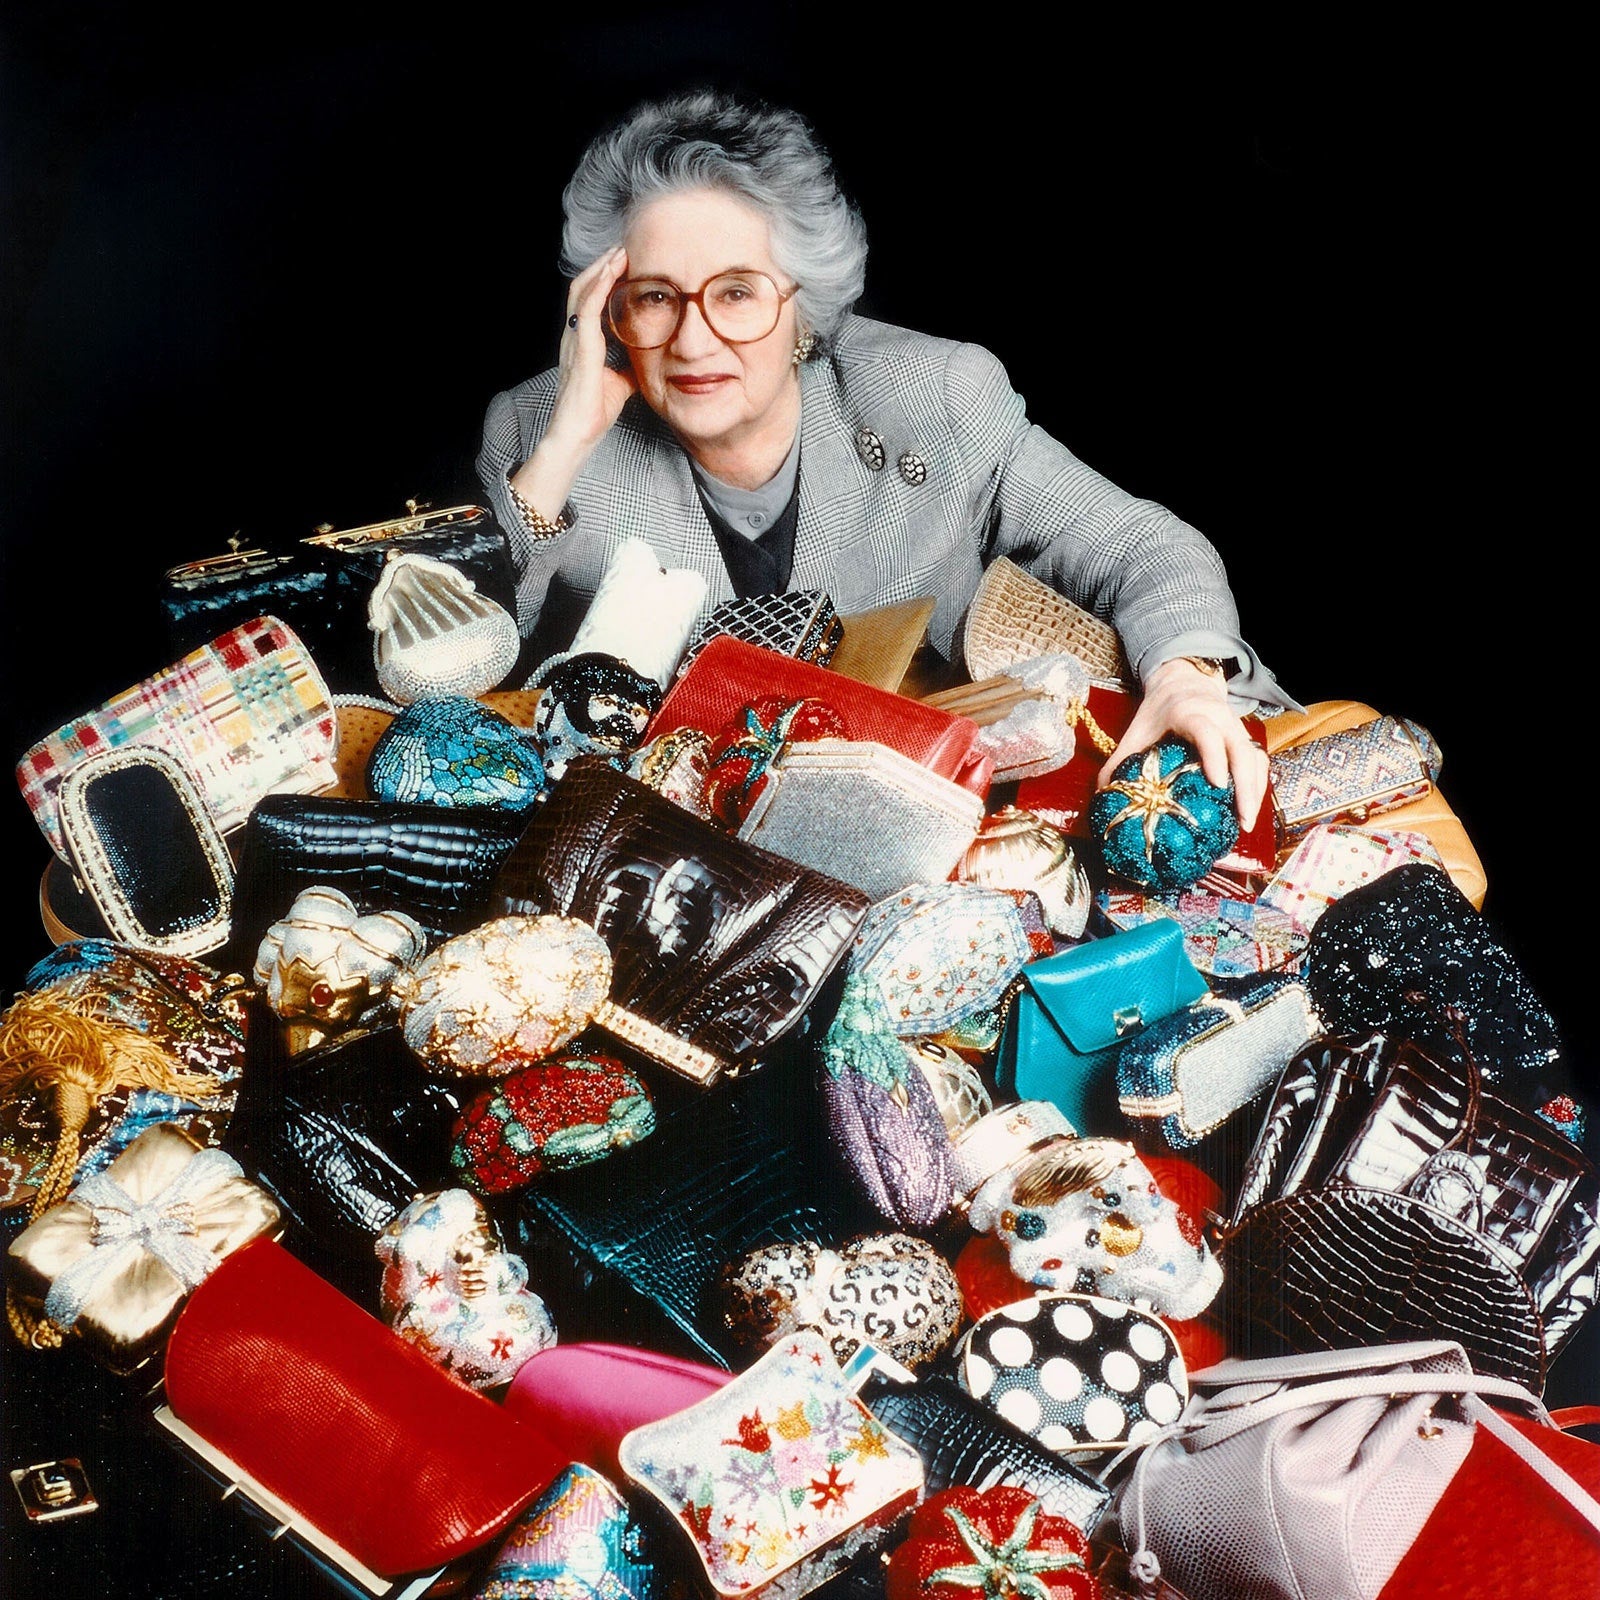 The incredible handbags of Judith Leiber